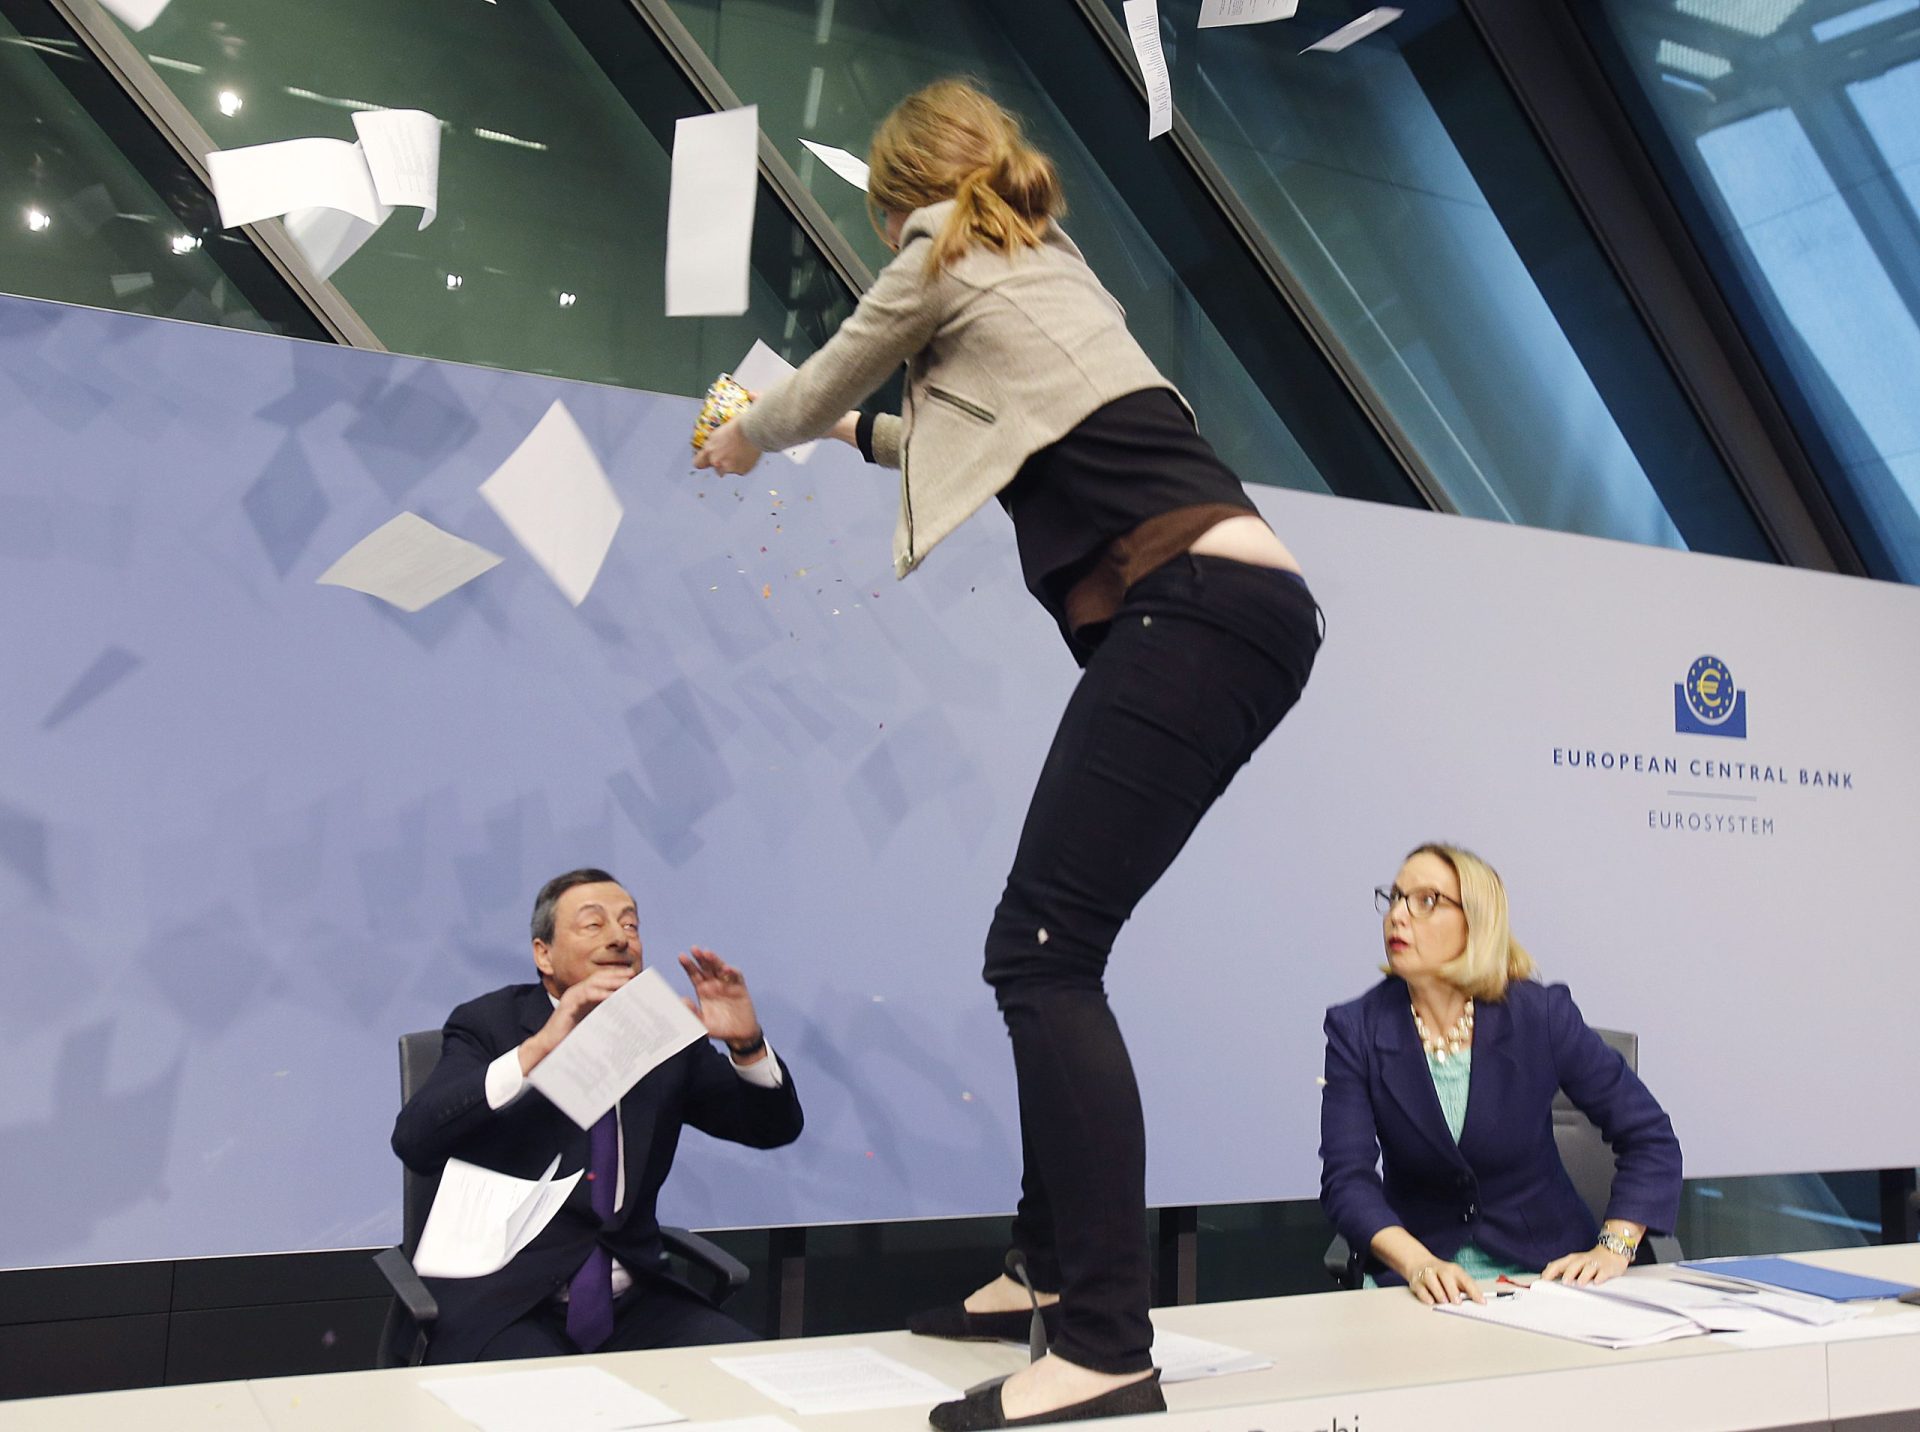 Activista atinge Draghi durante conferência de imprensa [vídeo]